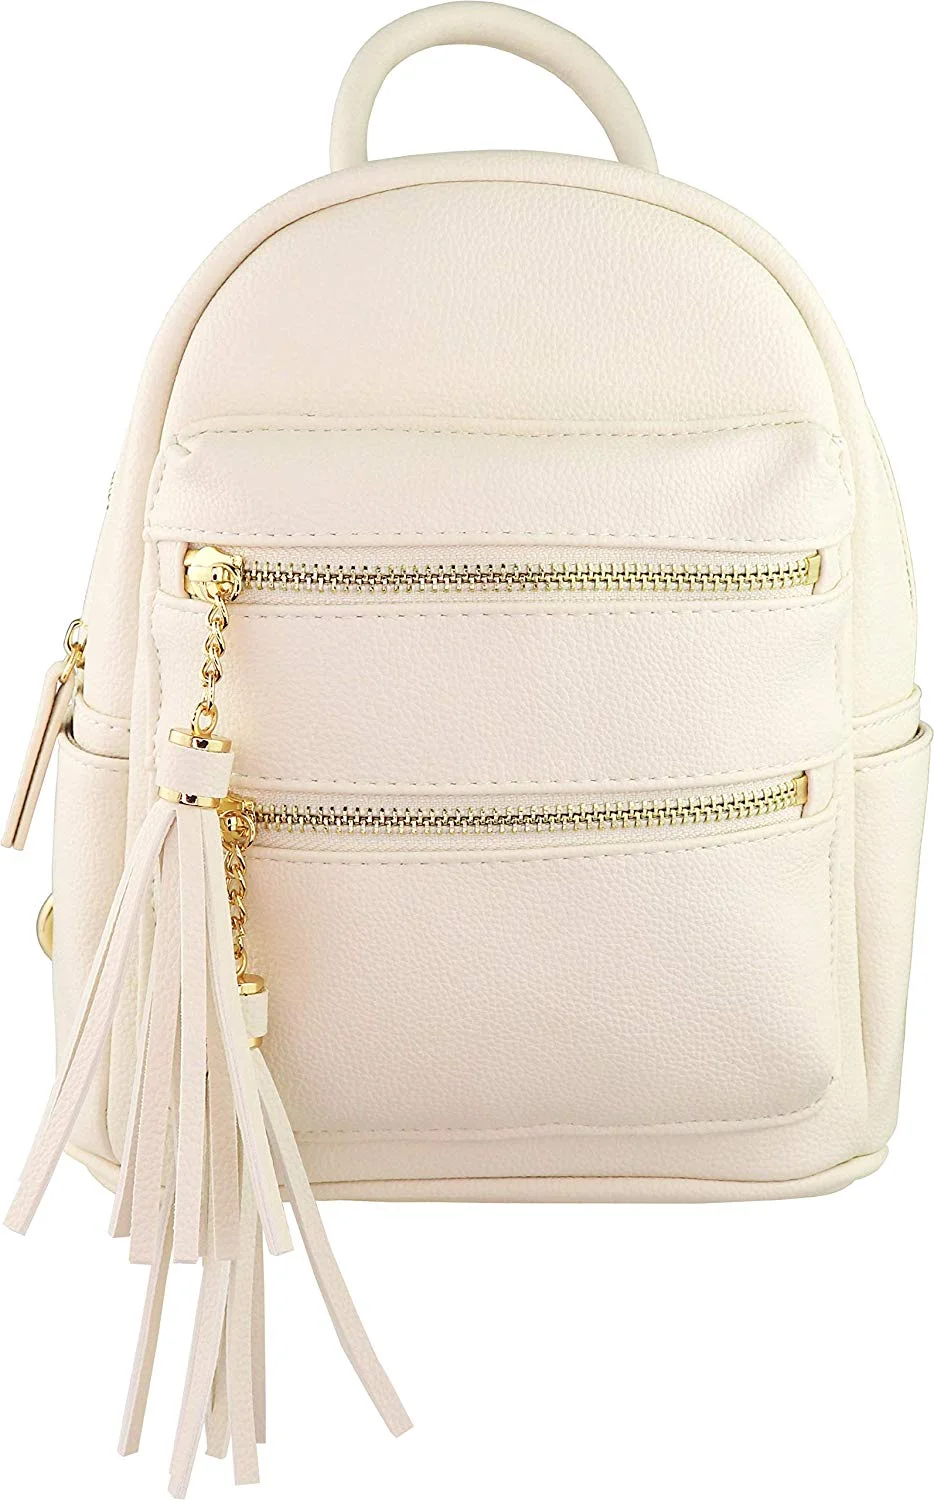 Women's Vegan Multi-Zipper Top Handle Mini Backpack with Tassel Accents